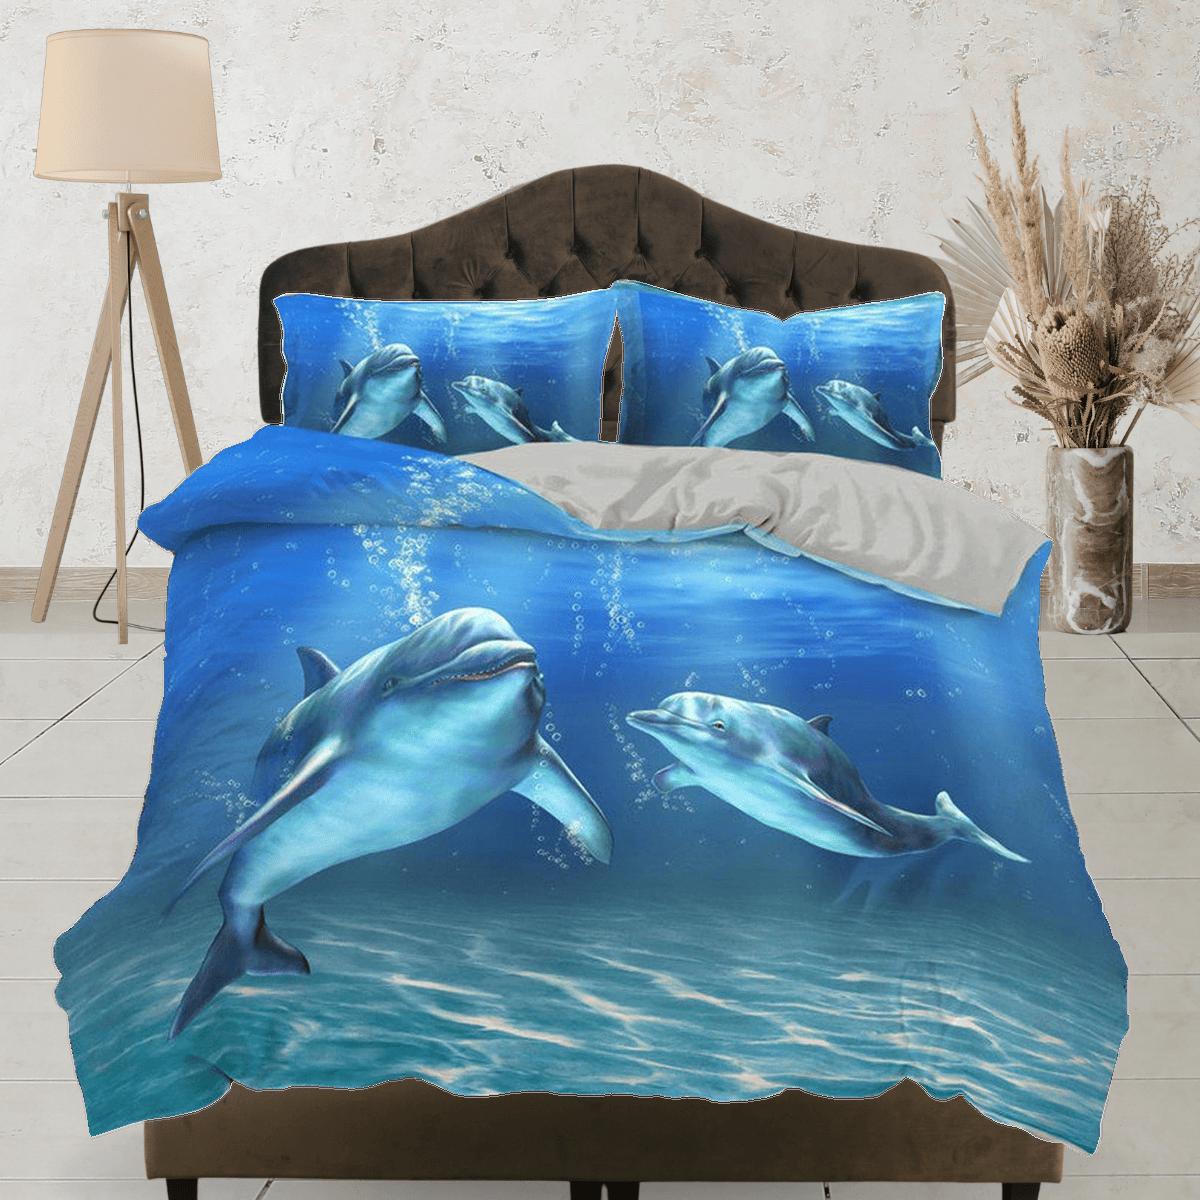 daintyduvet Cute dolphins under the sea bedding blue duvet cover, ocean blush decor bottle nose dolphin bedding set full king queen twin, dorm bedding